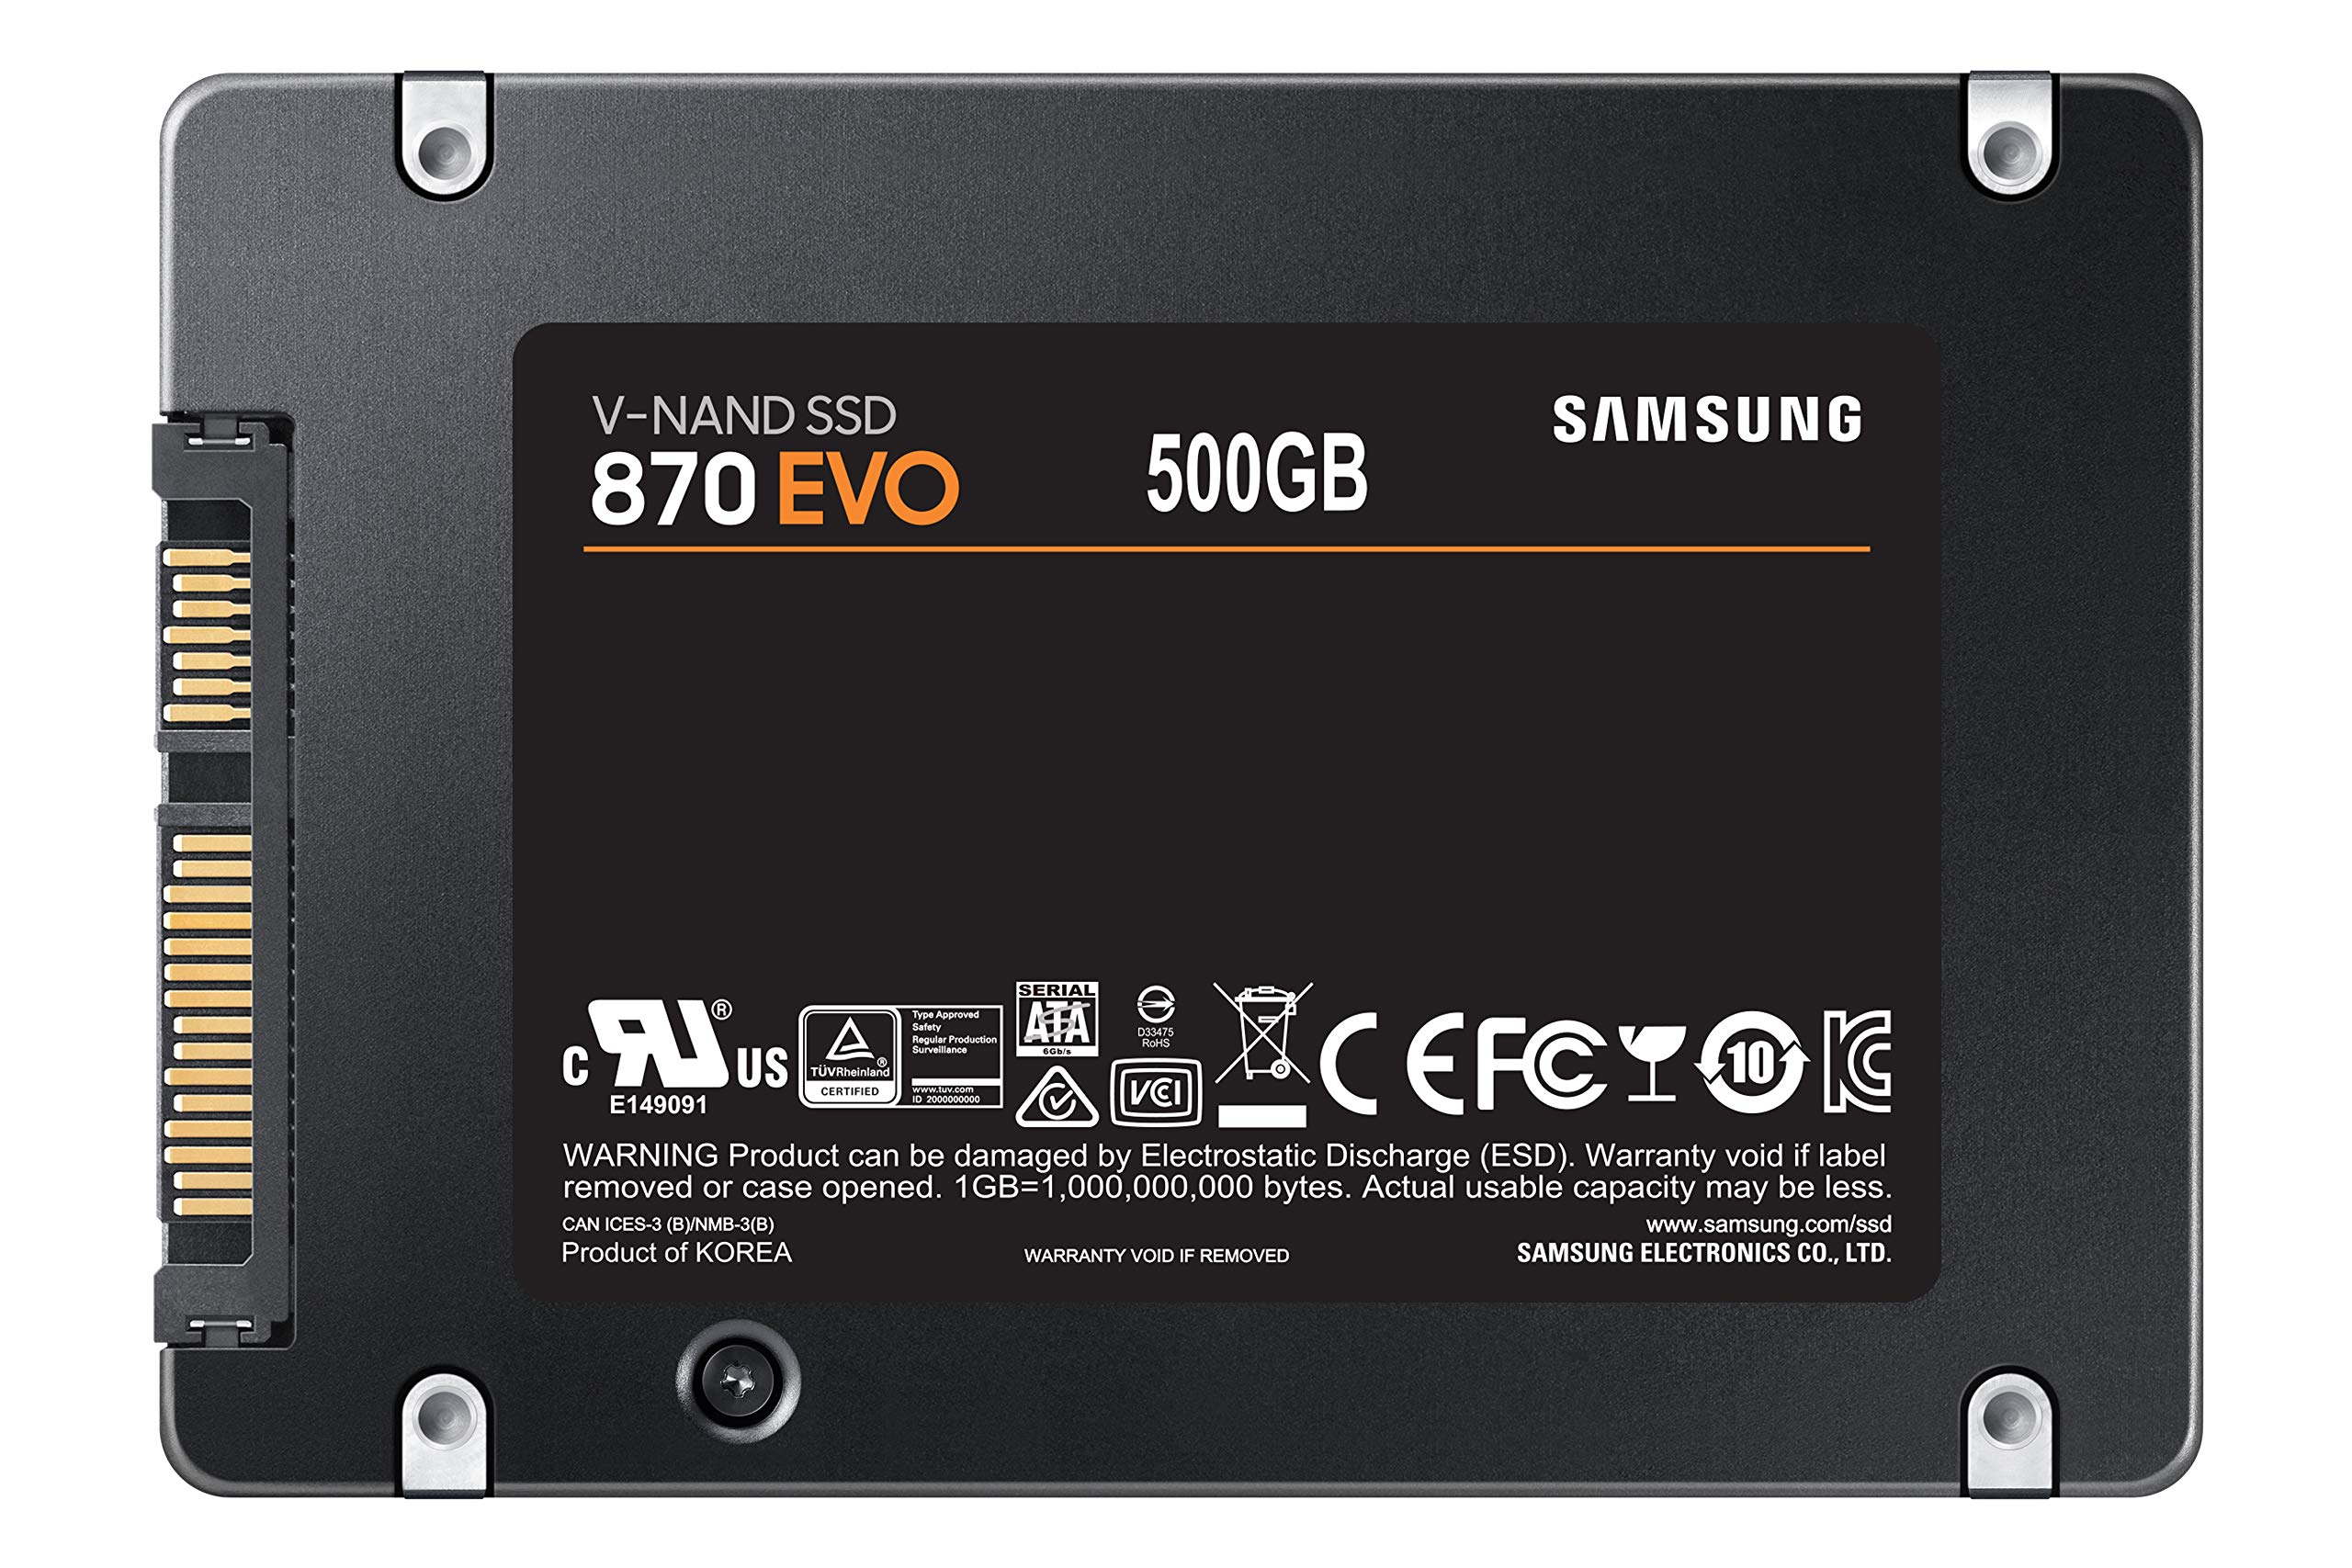 500GB Samsung 870 EVO SATA SSD drive $29.99 at Amazon and Best Buy